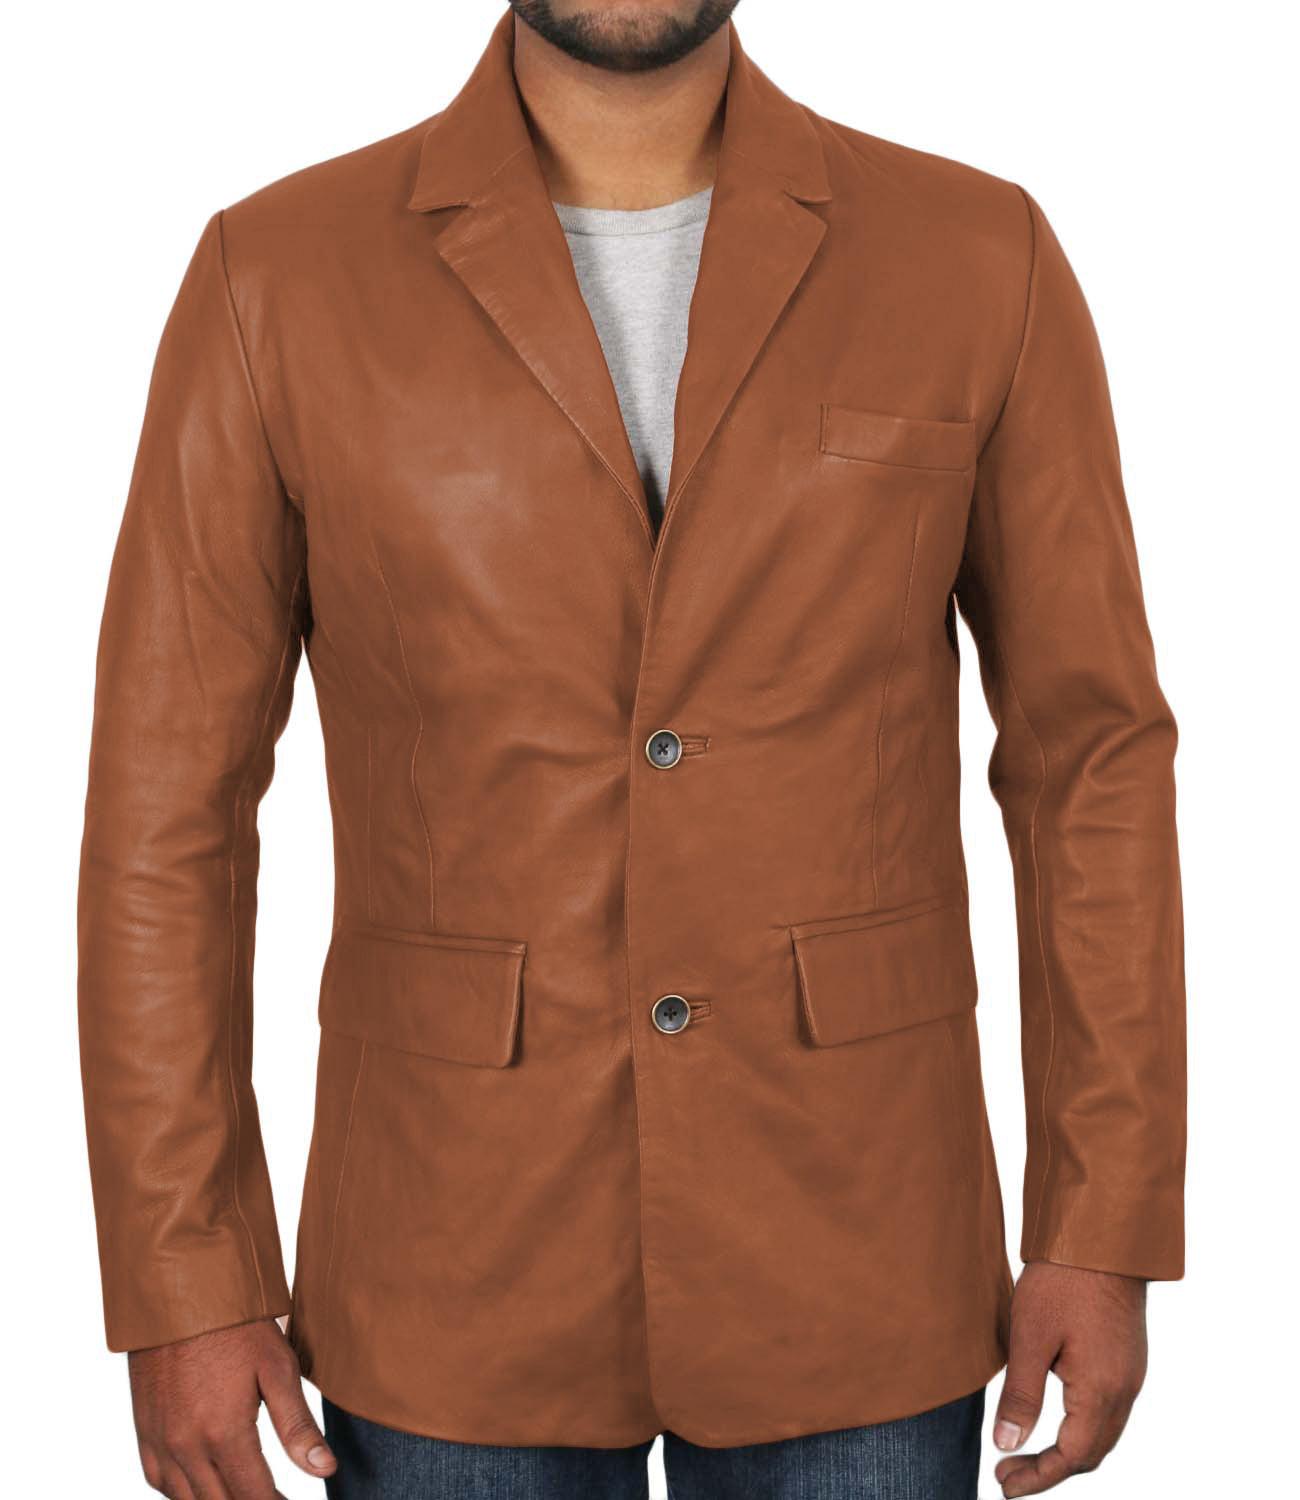 Leather Jackets Hub Mens Genuine Lambskin Leather Coat (Black, Blazer Jacket) - 1501833